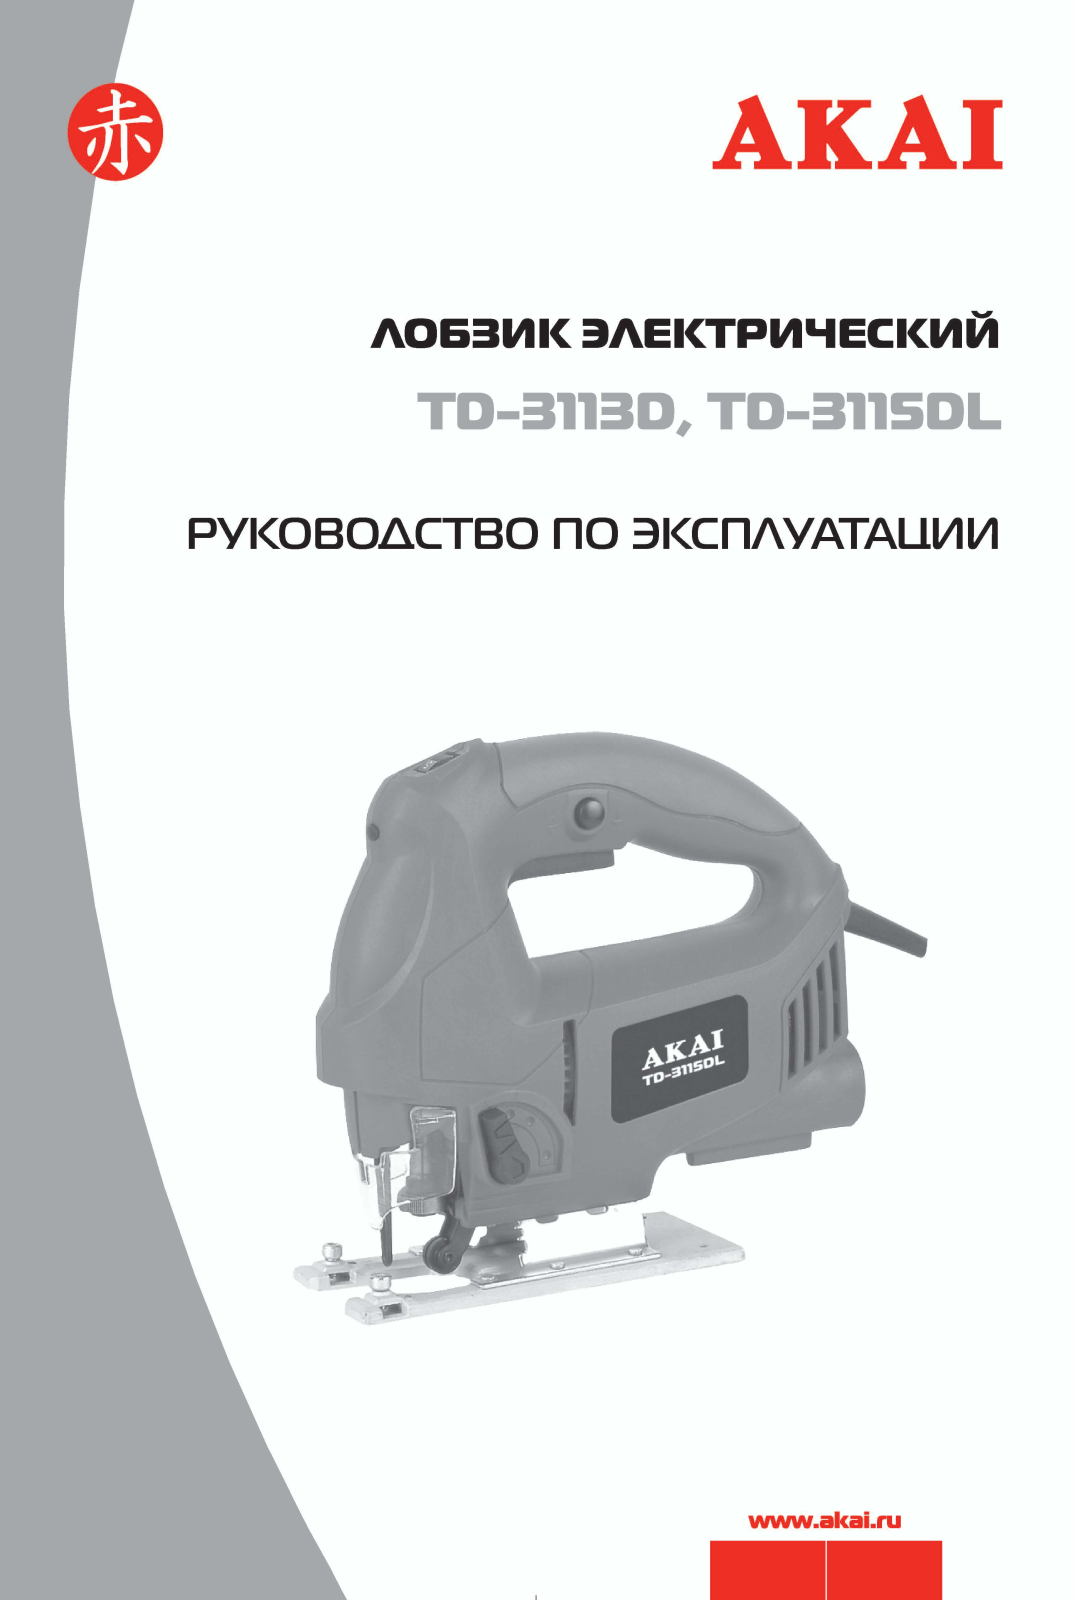 Akai TD-3113D, TD-3115DL User Manual